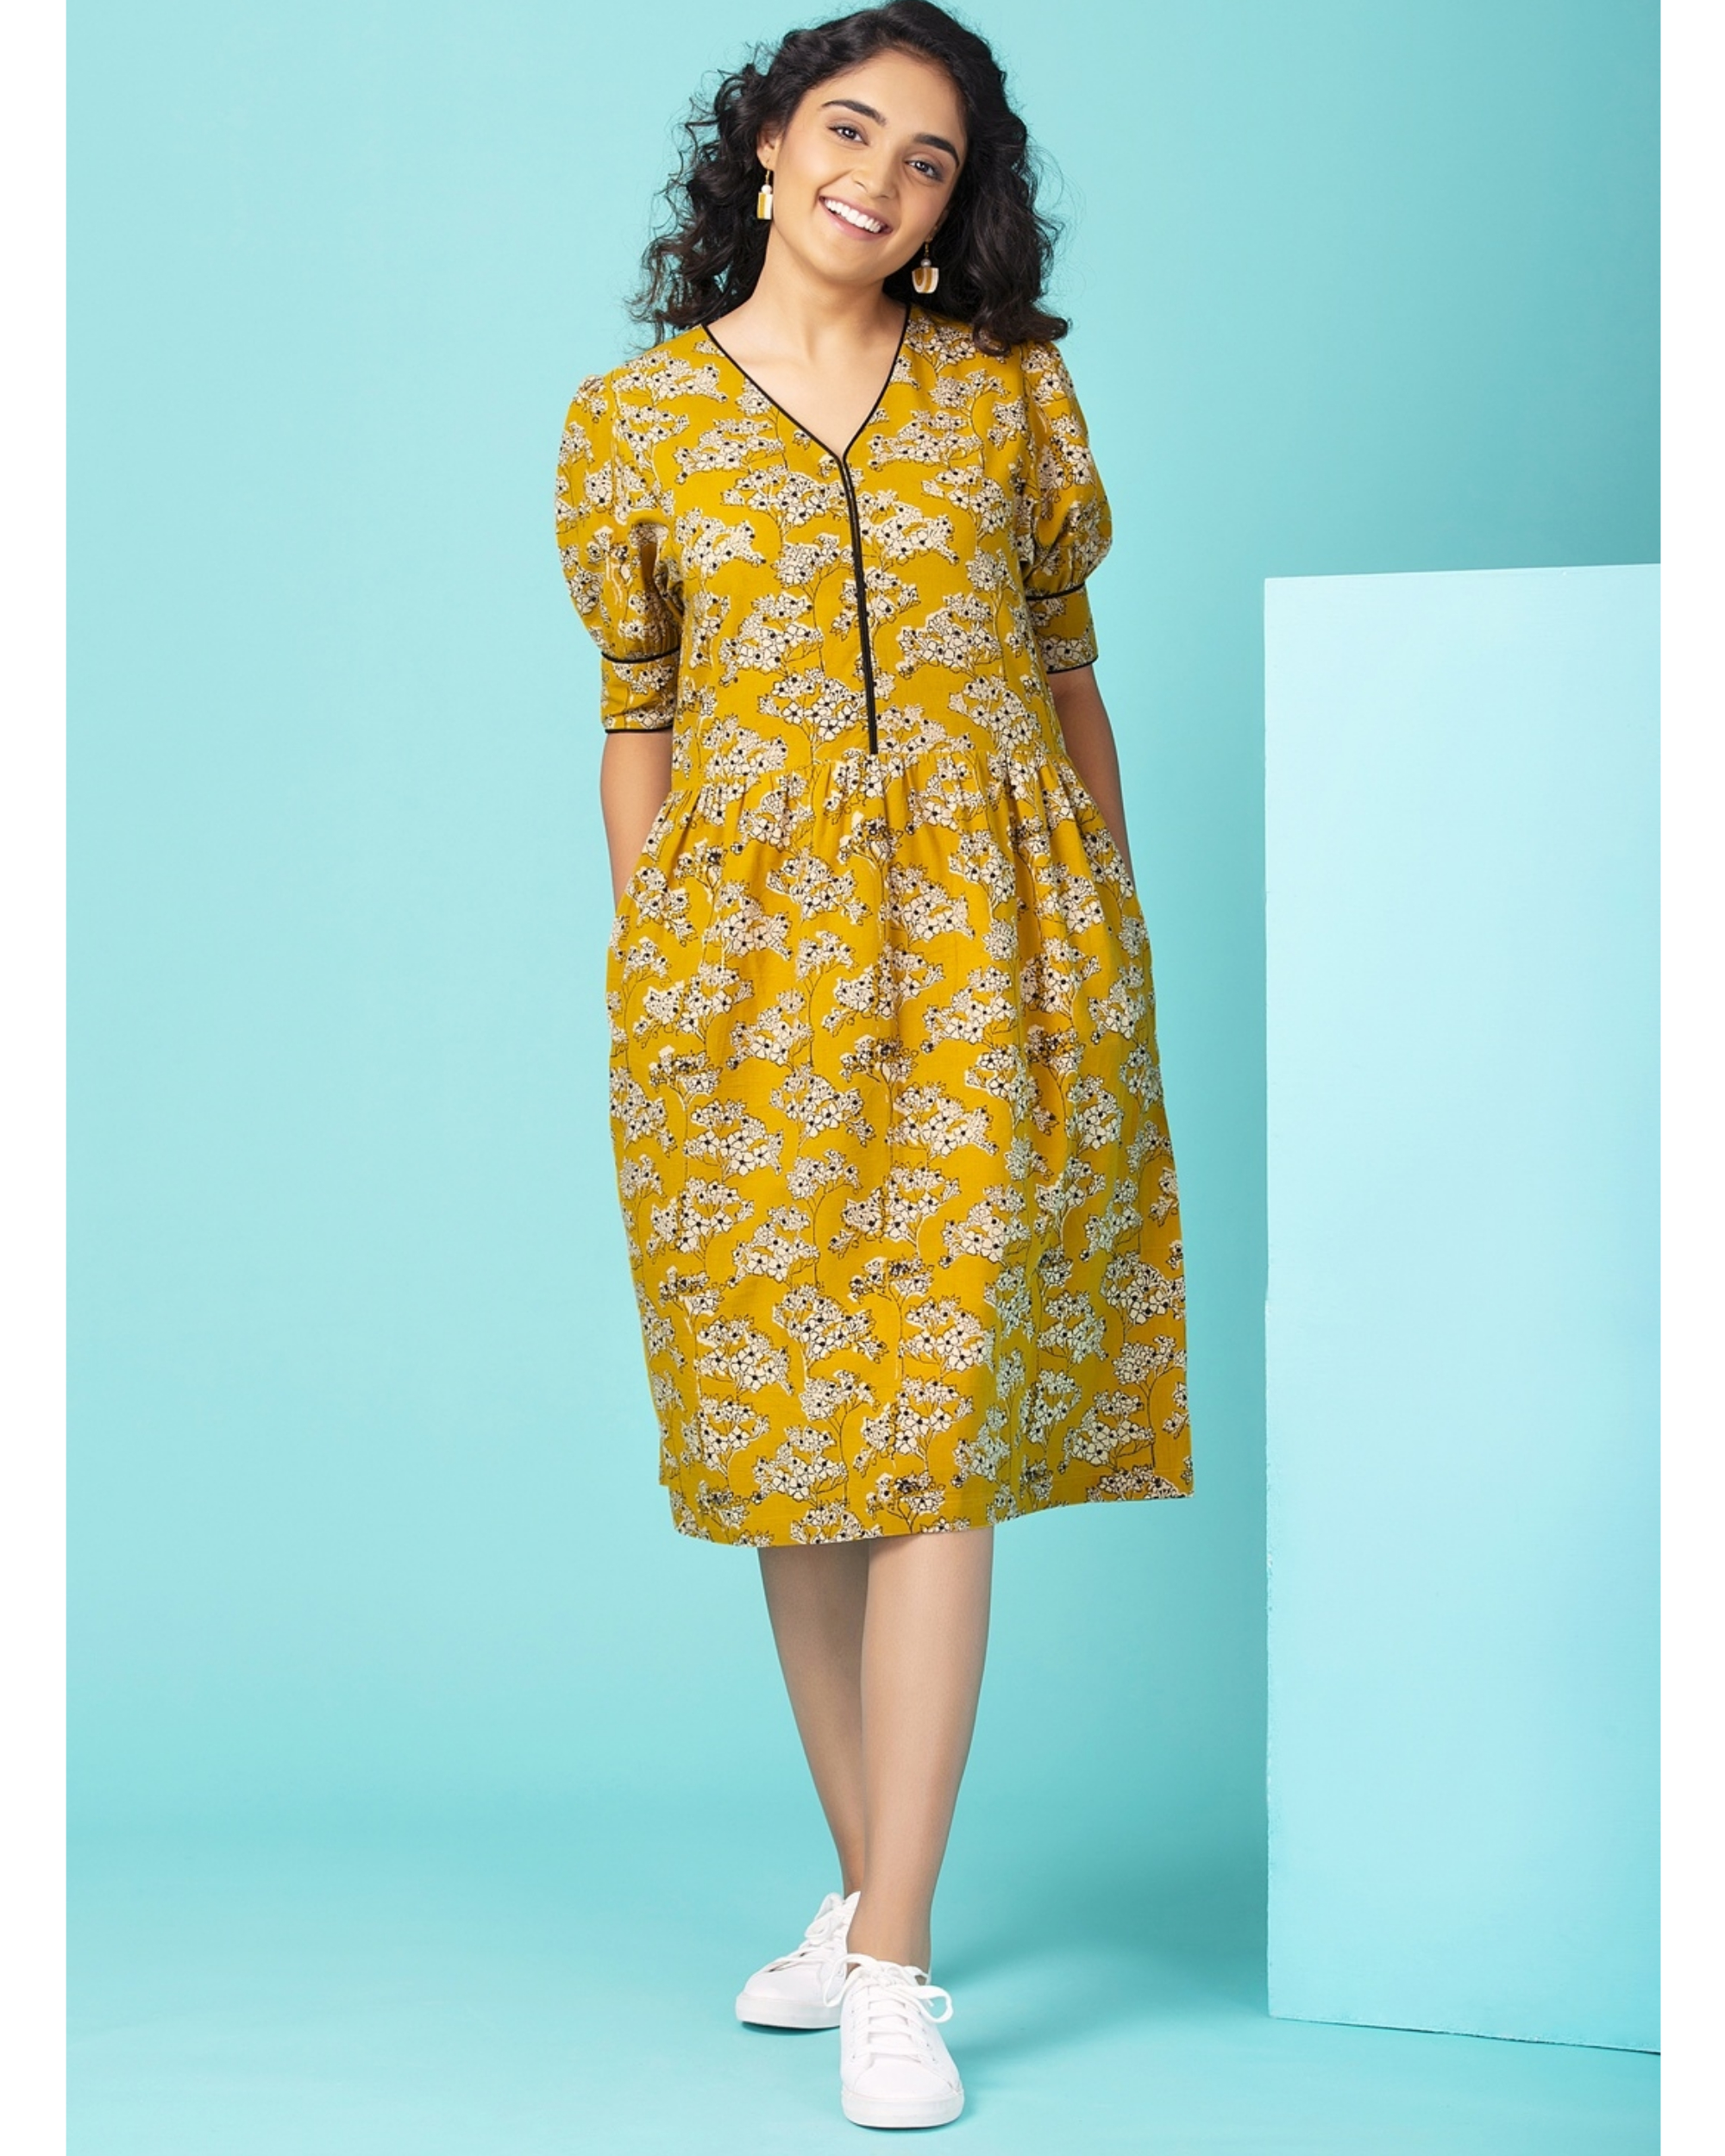 Tuscan yellow vintage dress by Twirl Studio | The Secret Label